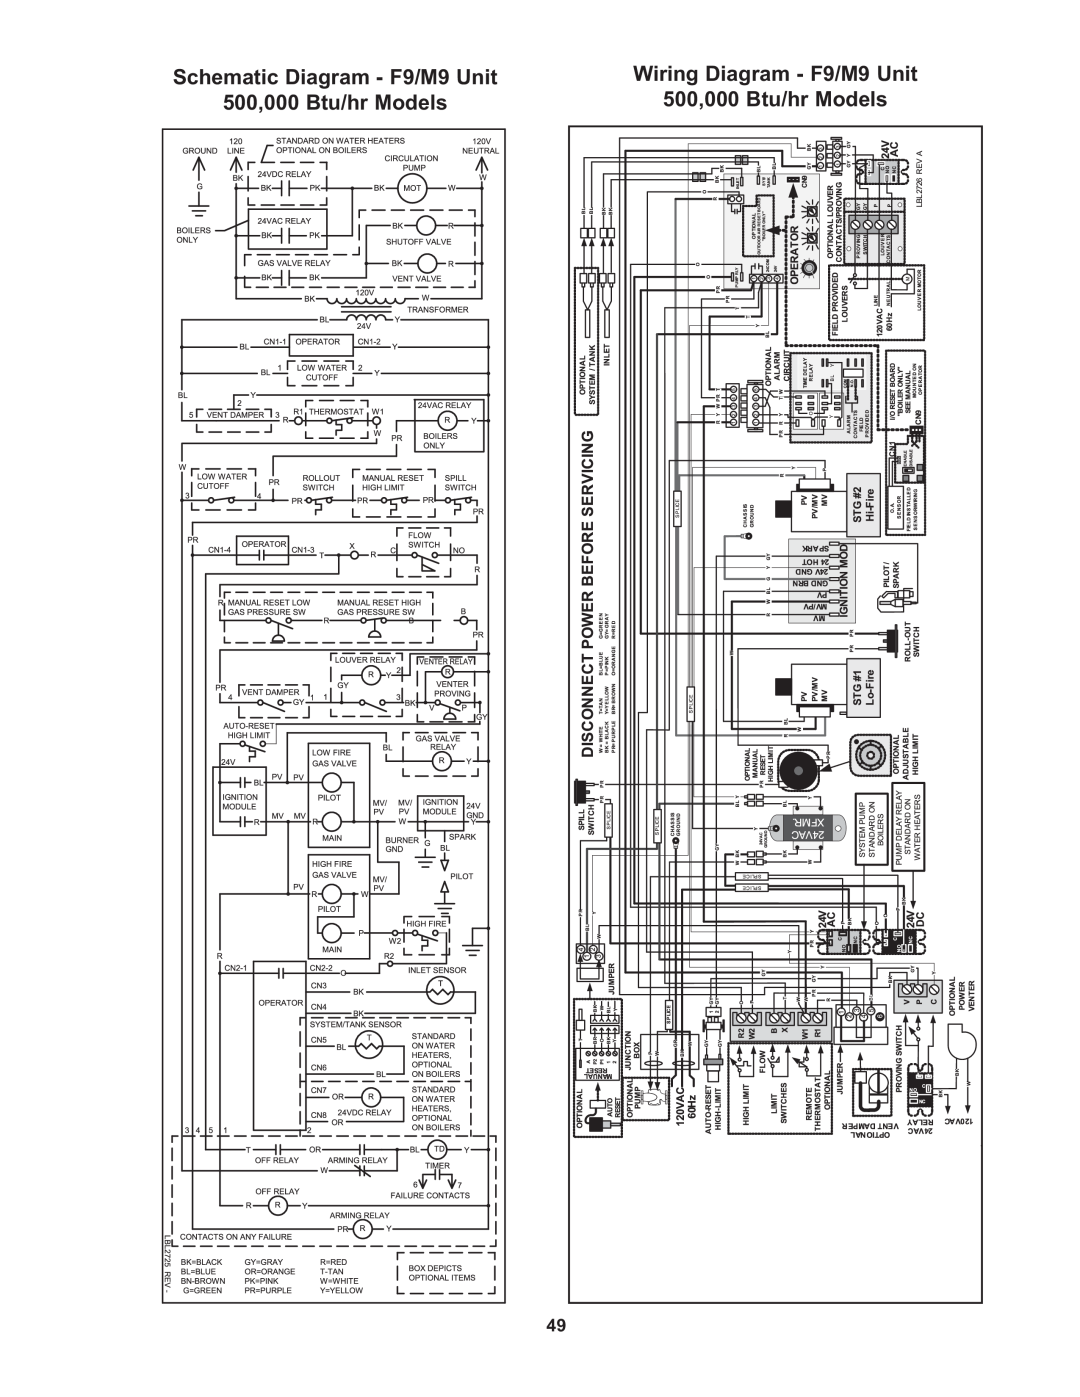 Lochinvar CP-5M-4/08, 45, RSB-i&s-05 Schematic Diagram - F9/M9 Unit, 500,000 Btu/hr Models, Wiring Diagram - F9/M9 Unit 